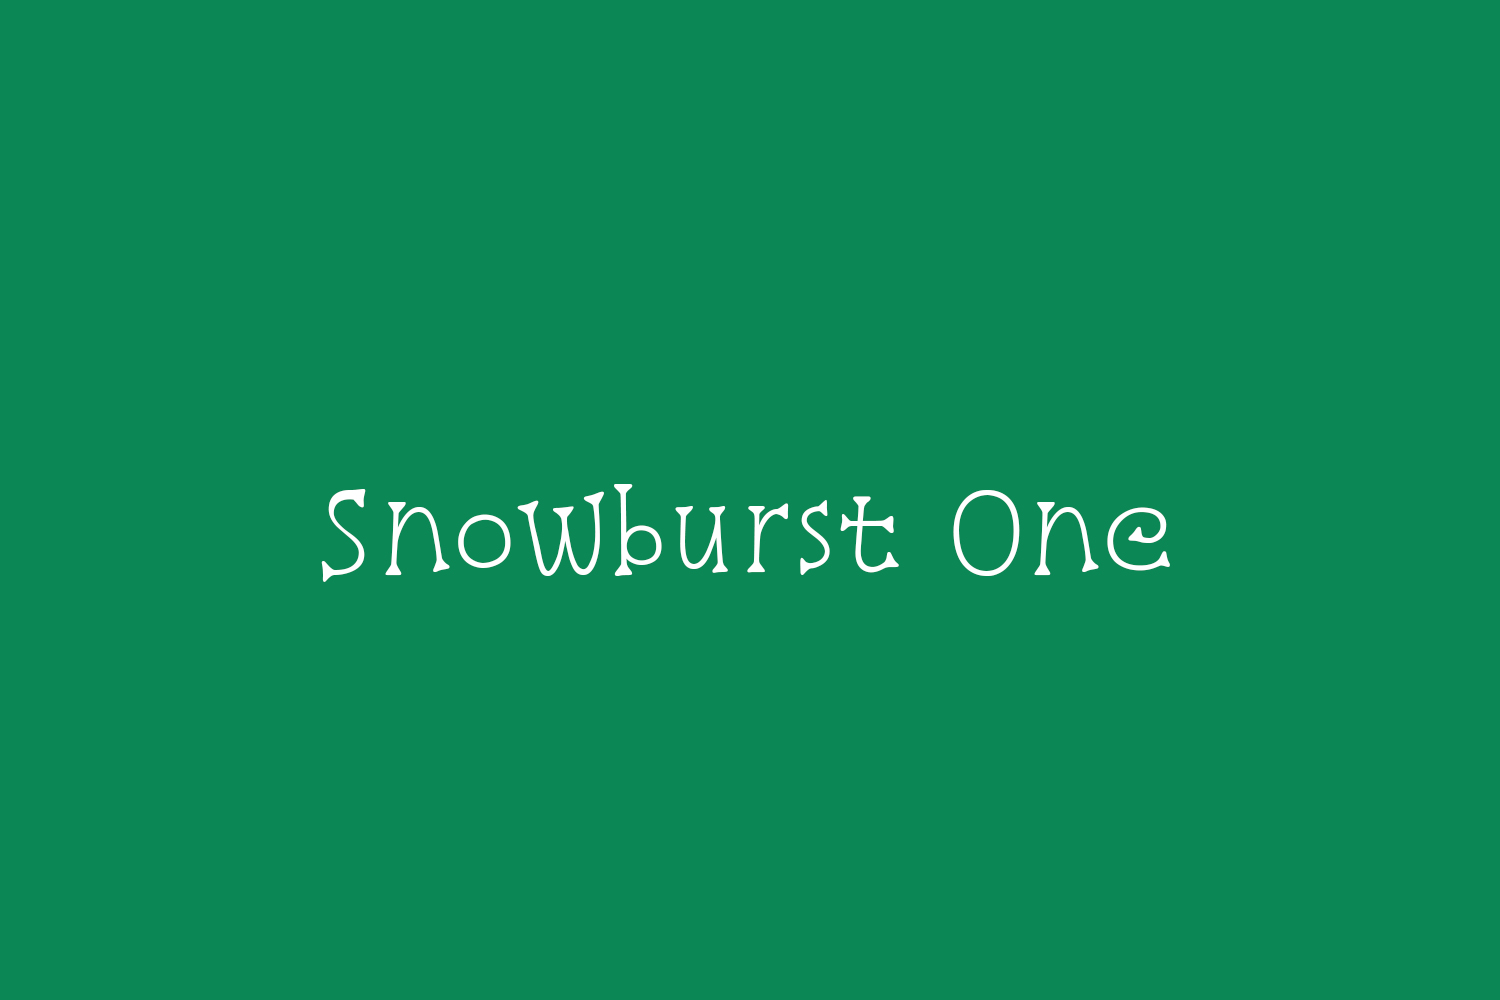 Snowburst One